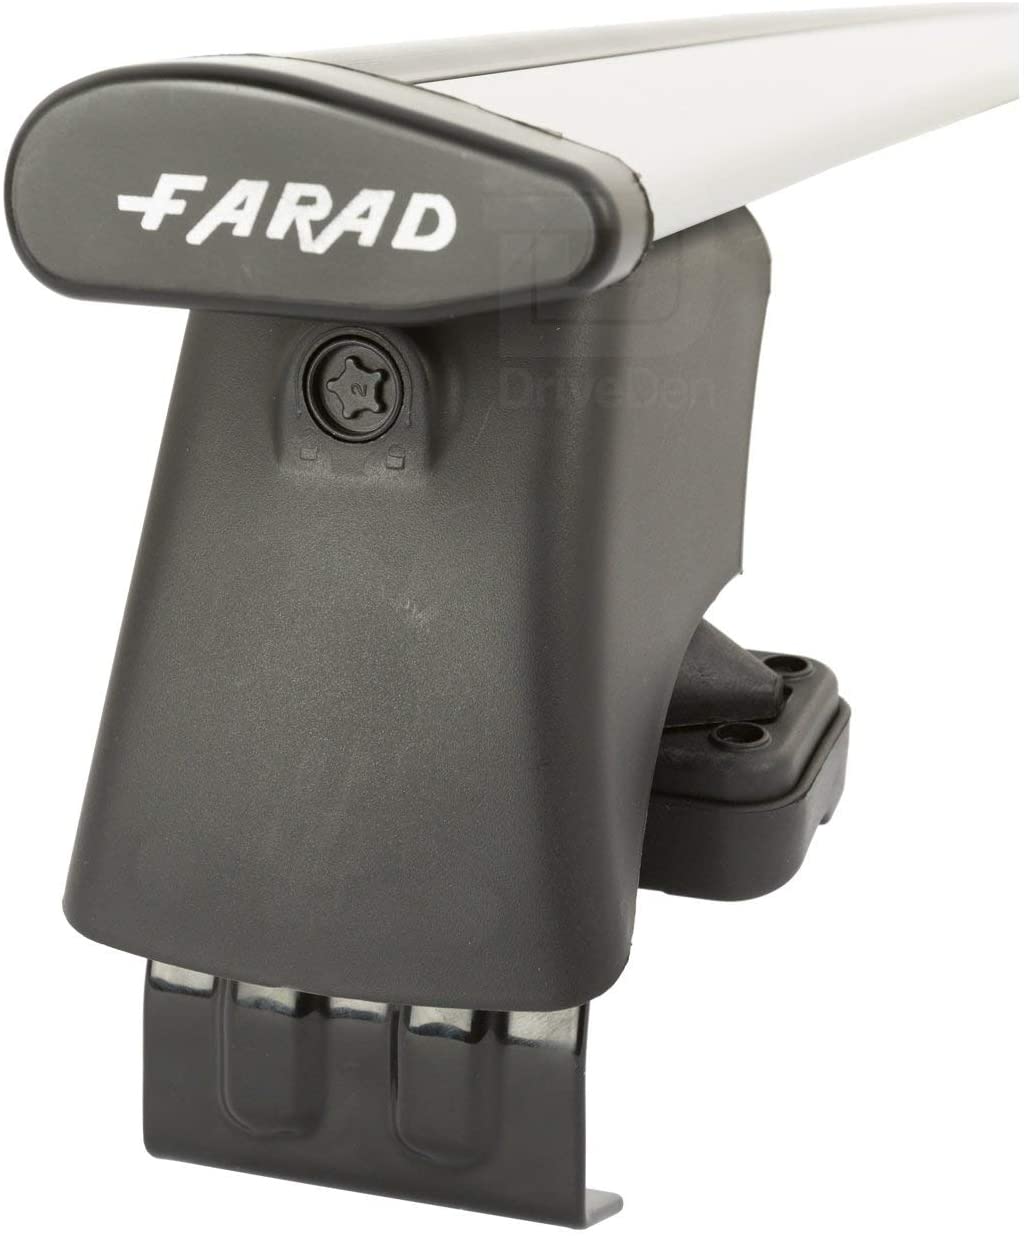 FARAD-Kit H2 per barre portatutto - Volkswagen Passat 2015> (senza corrimano)